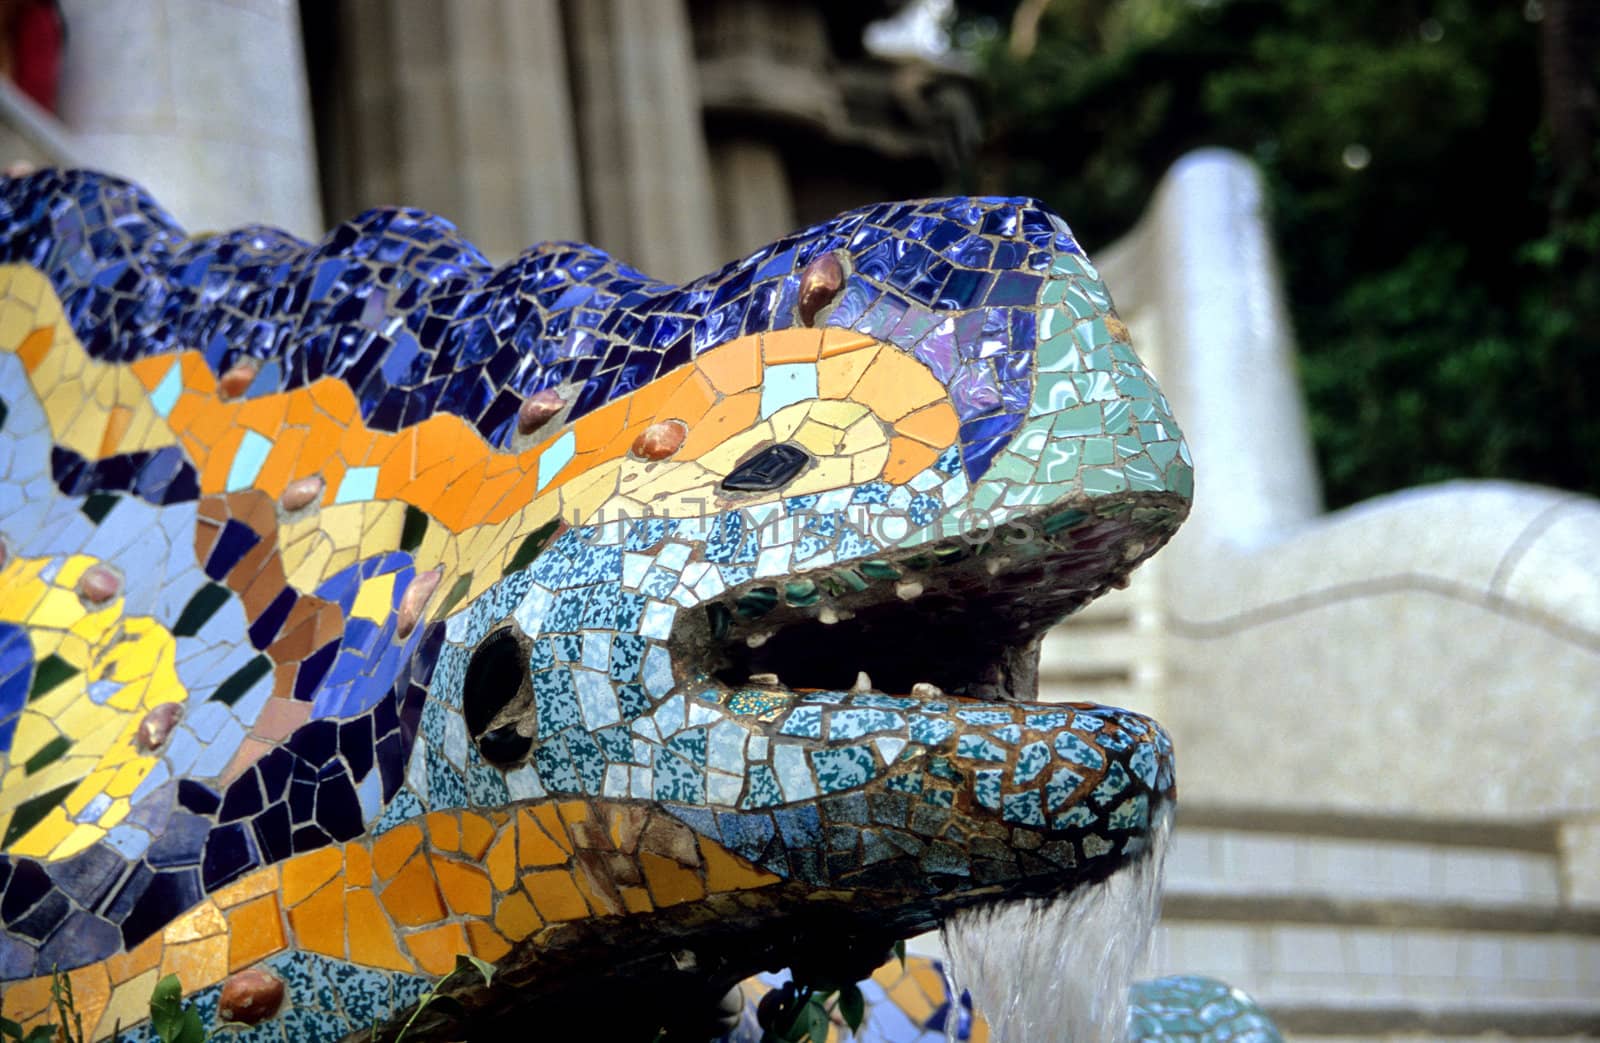 Barcelona Lizard Fountain by ACMPhoto